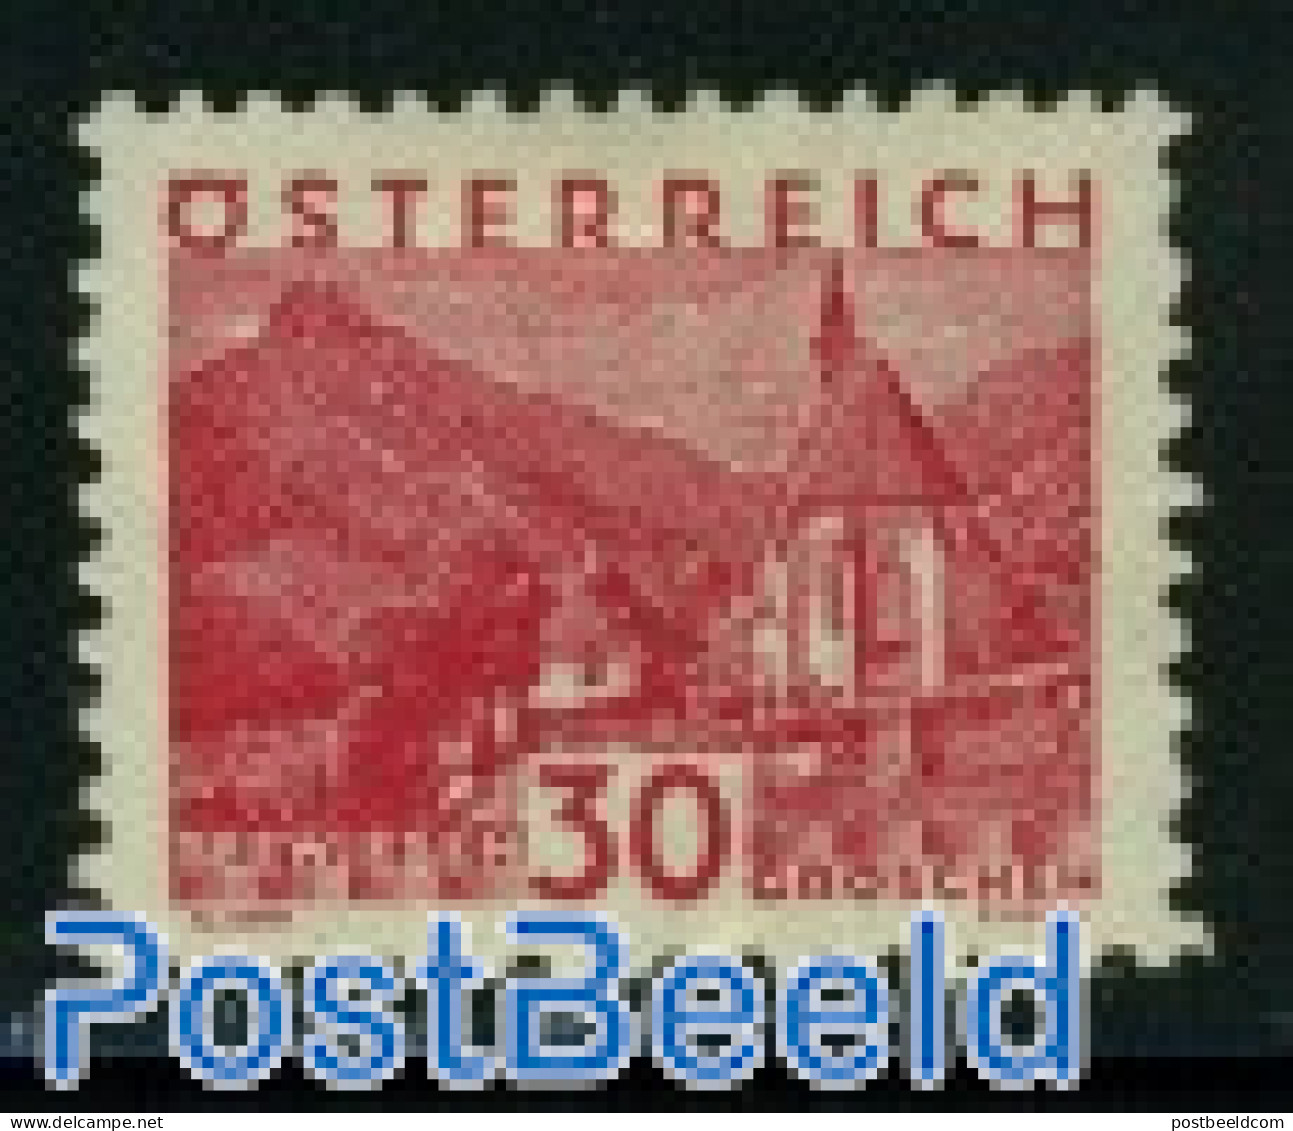 Austria 1932 Stamp Out Of Set, Unused (hinged) - Ungebraucht